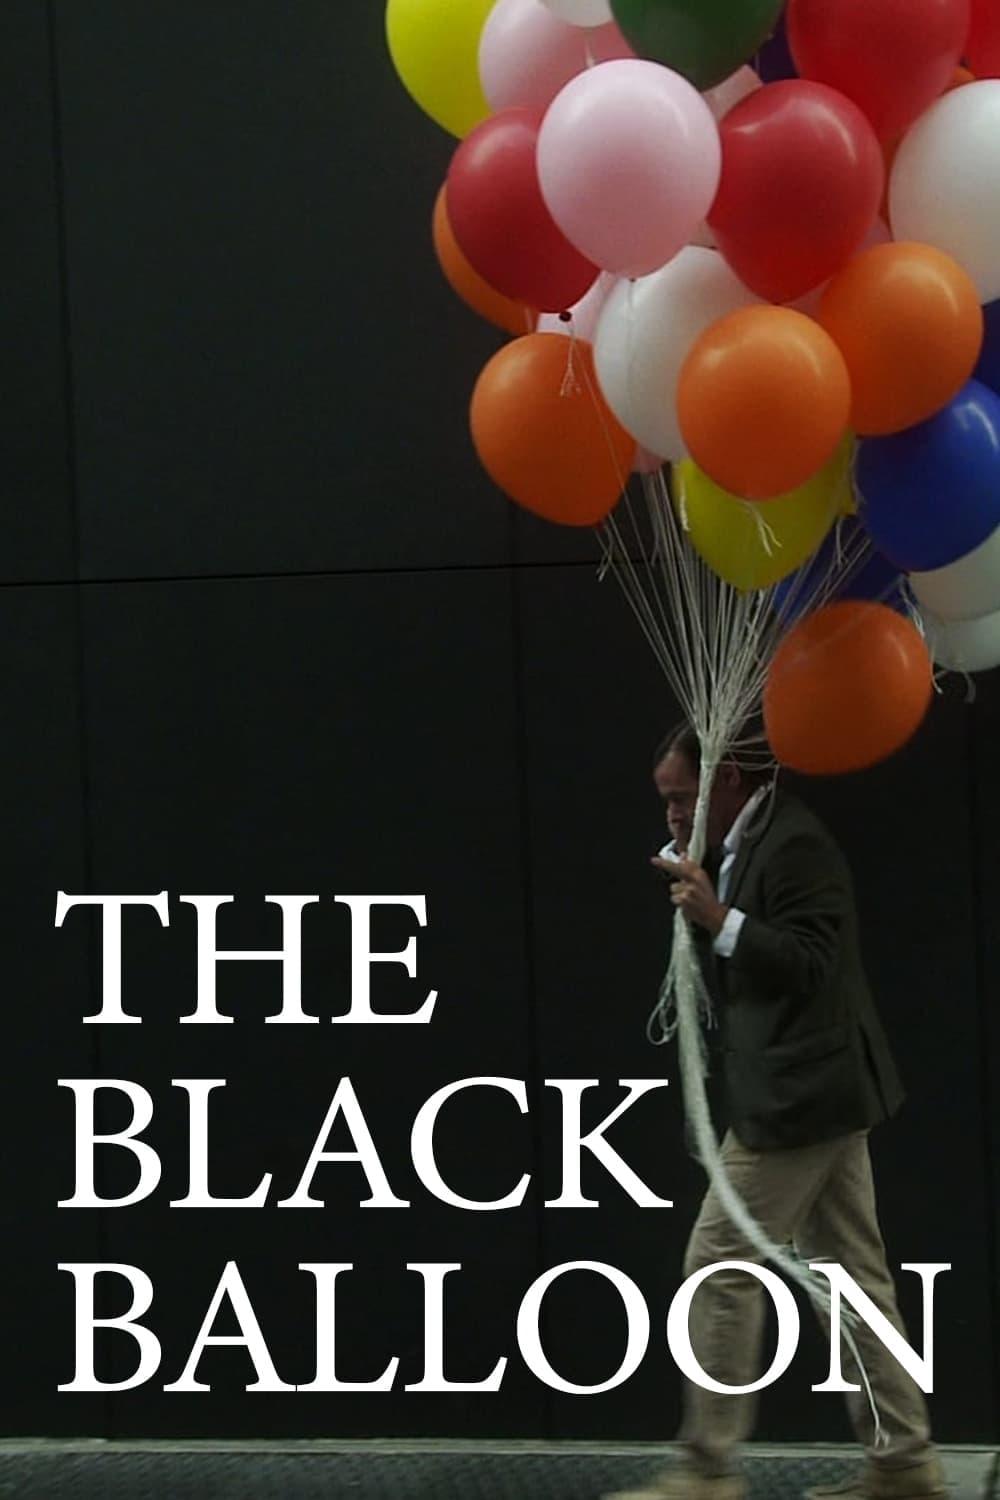 The Black Balloon poster